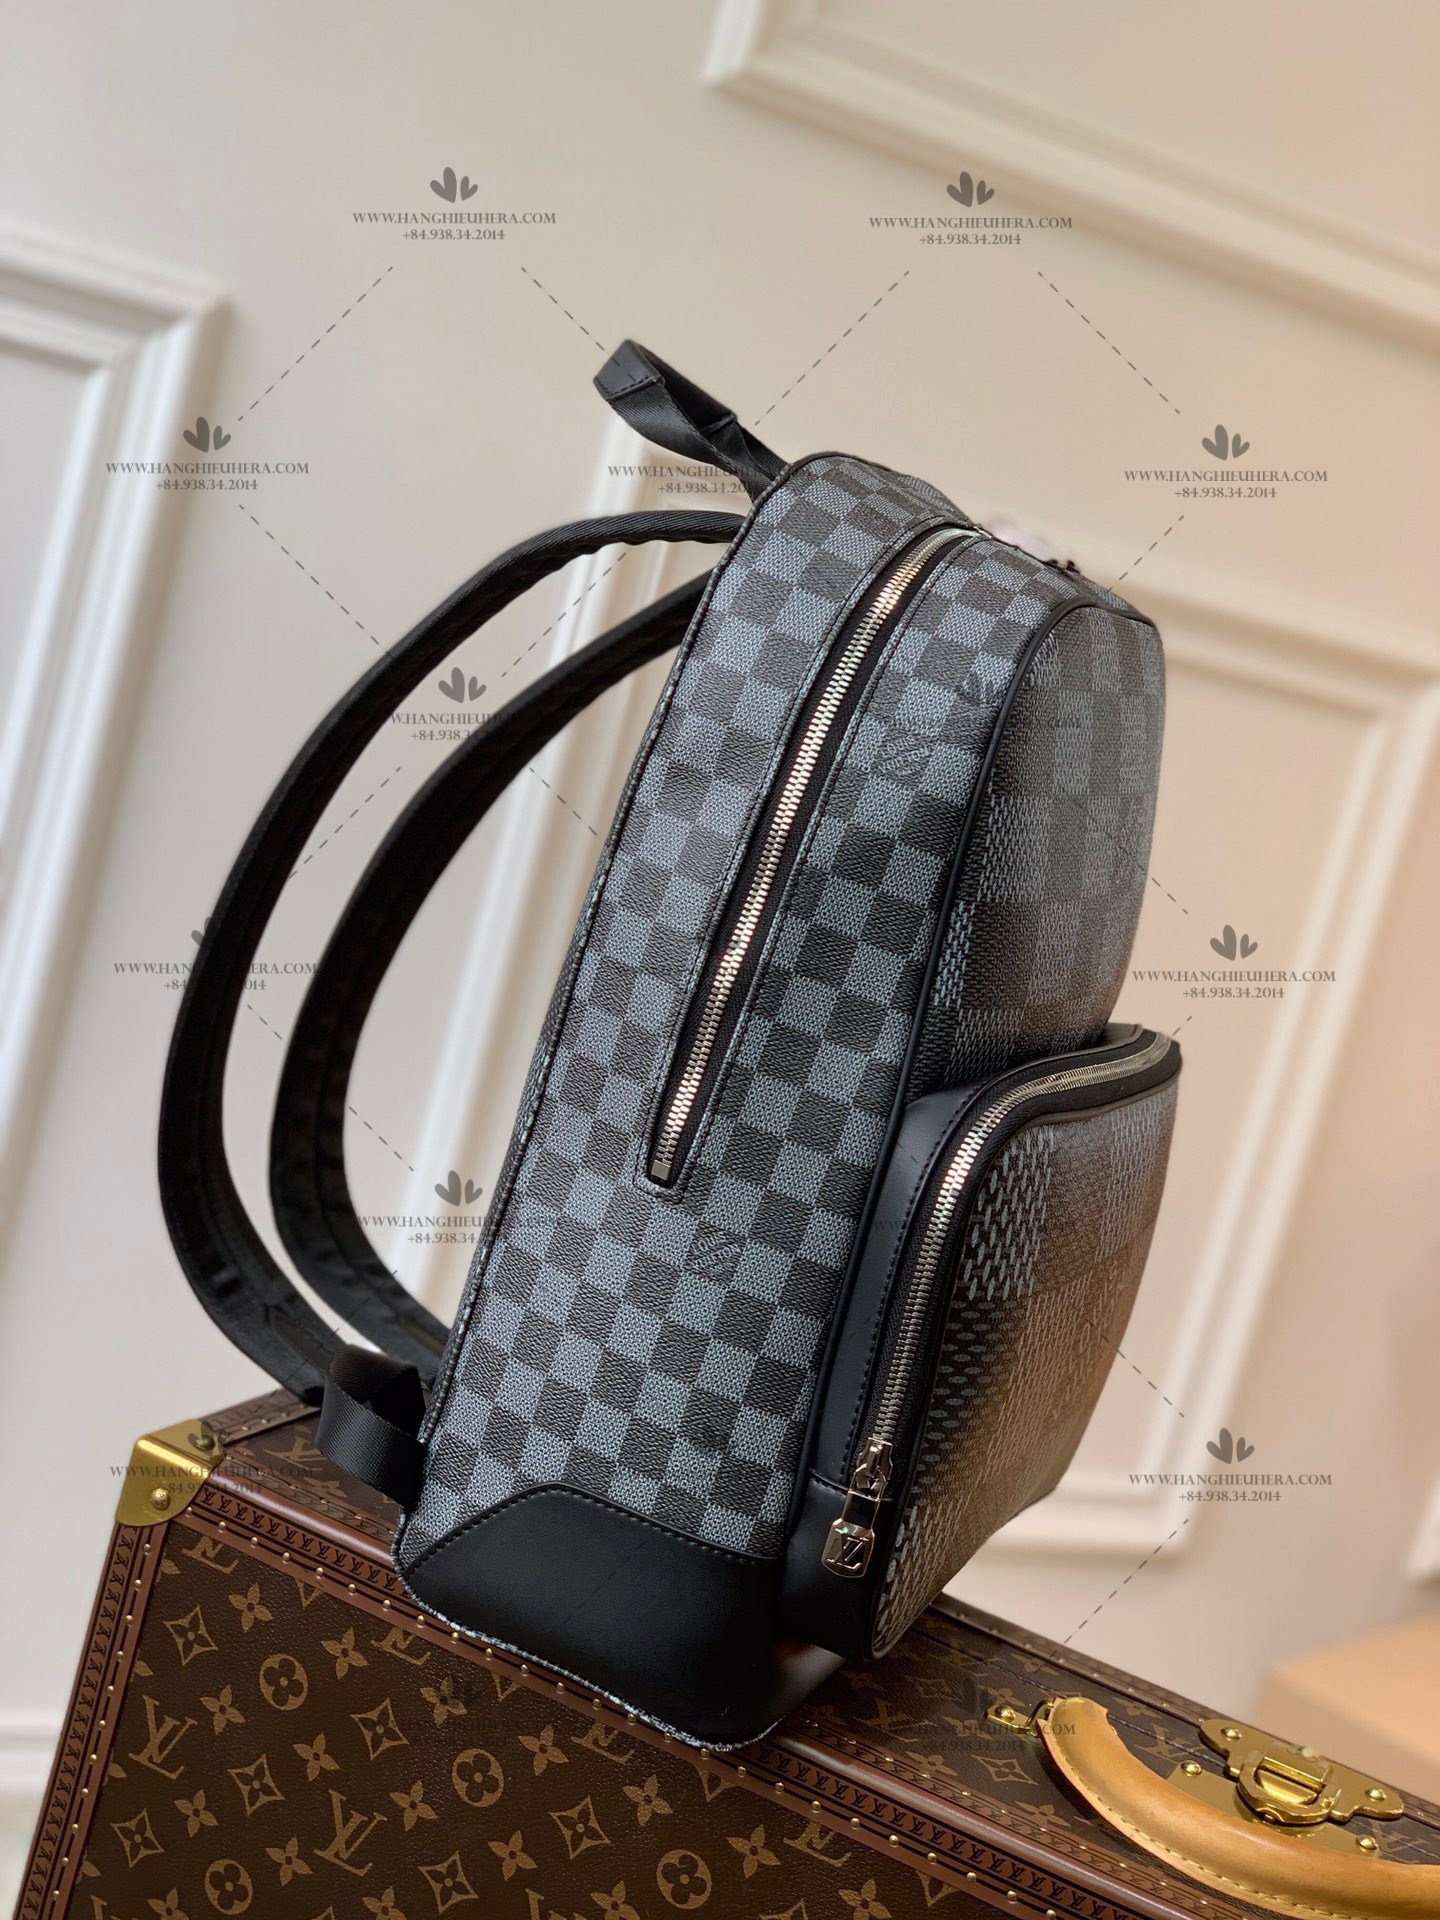 Louis Vuitton Campus backpack (N50009)